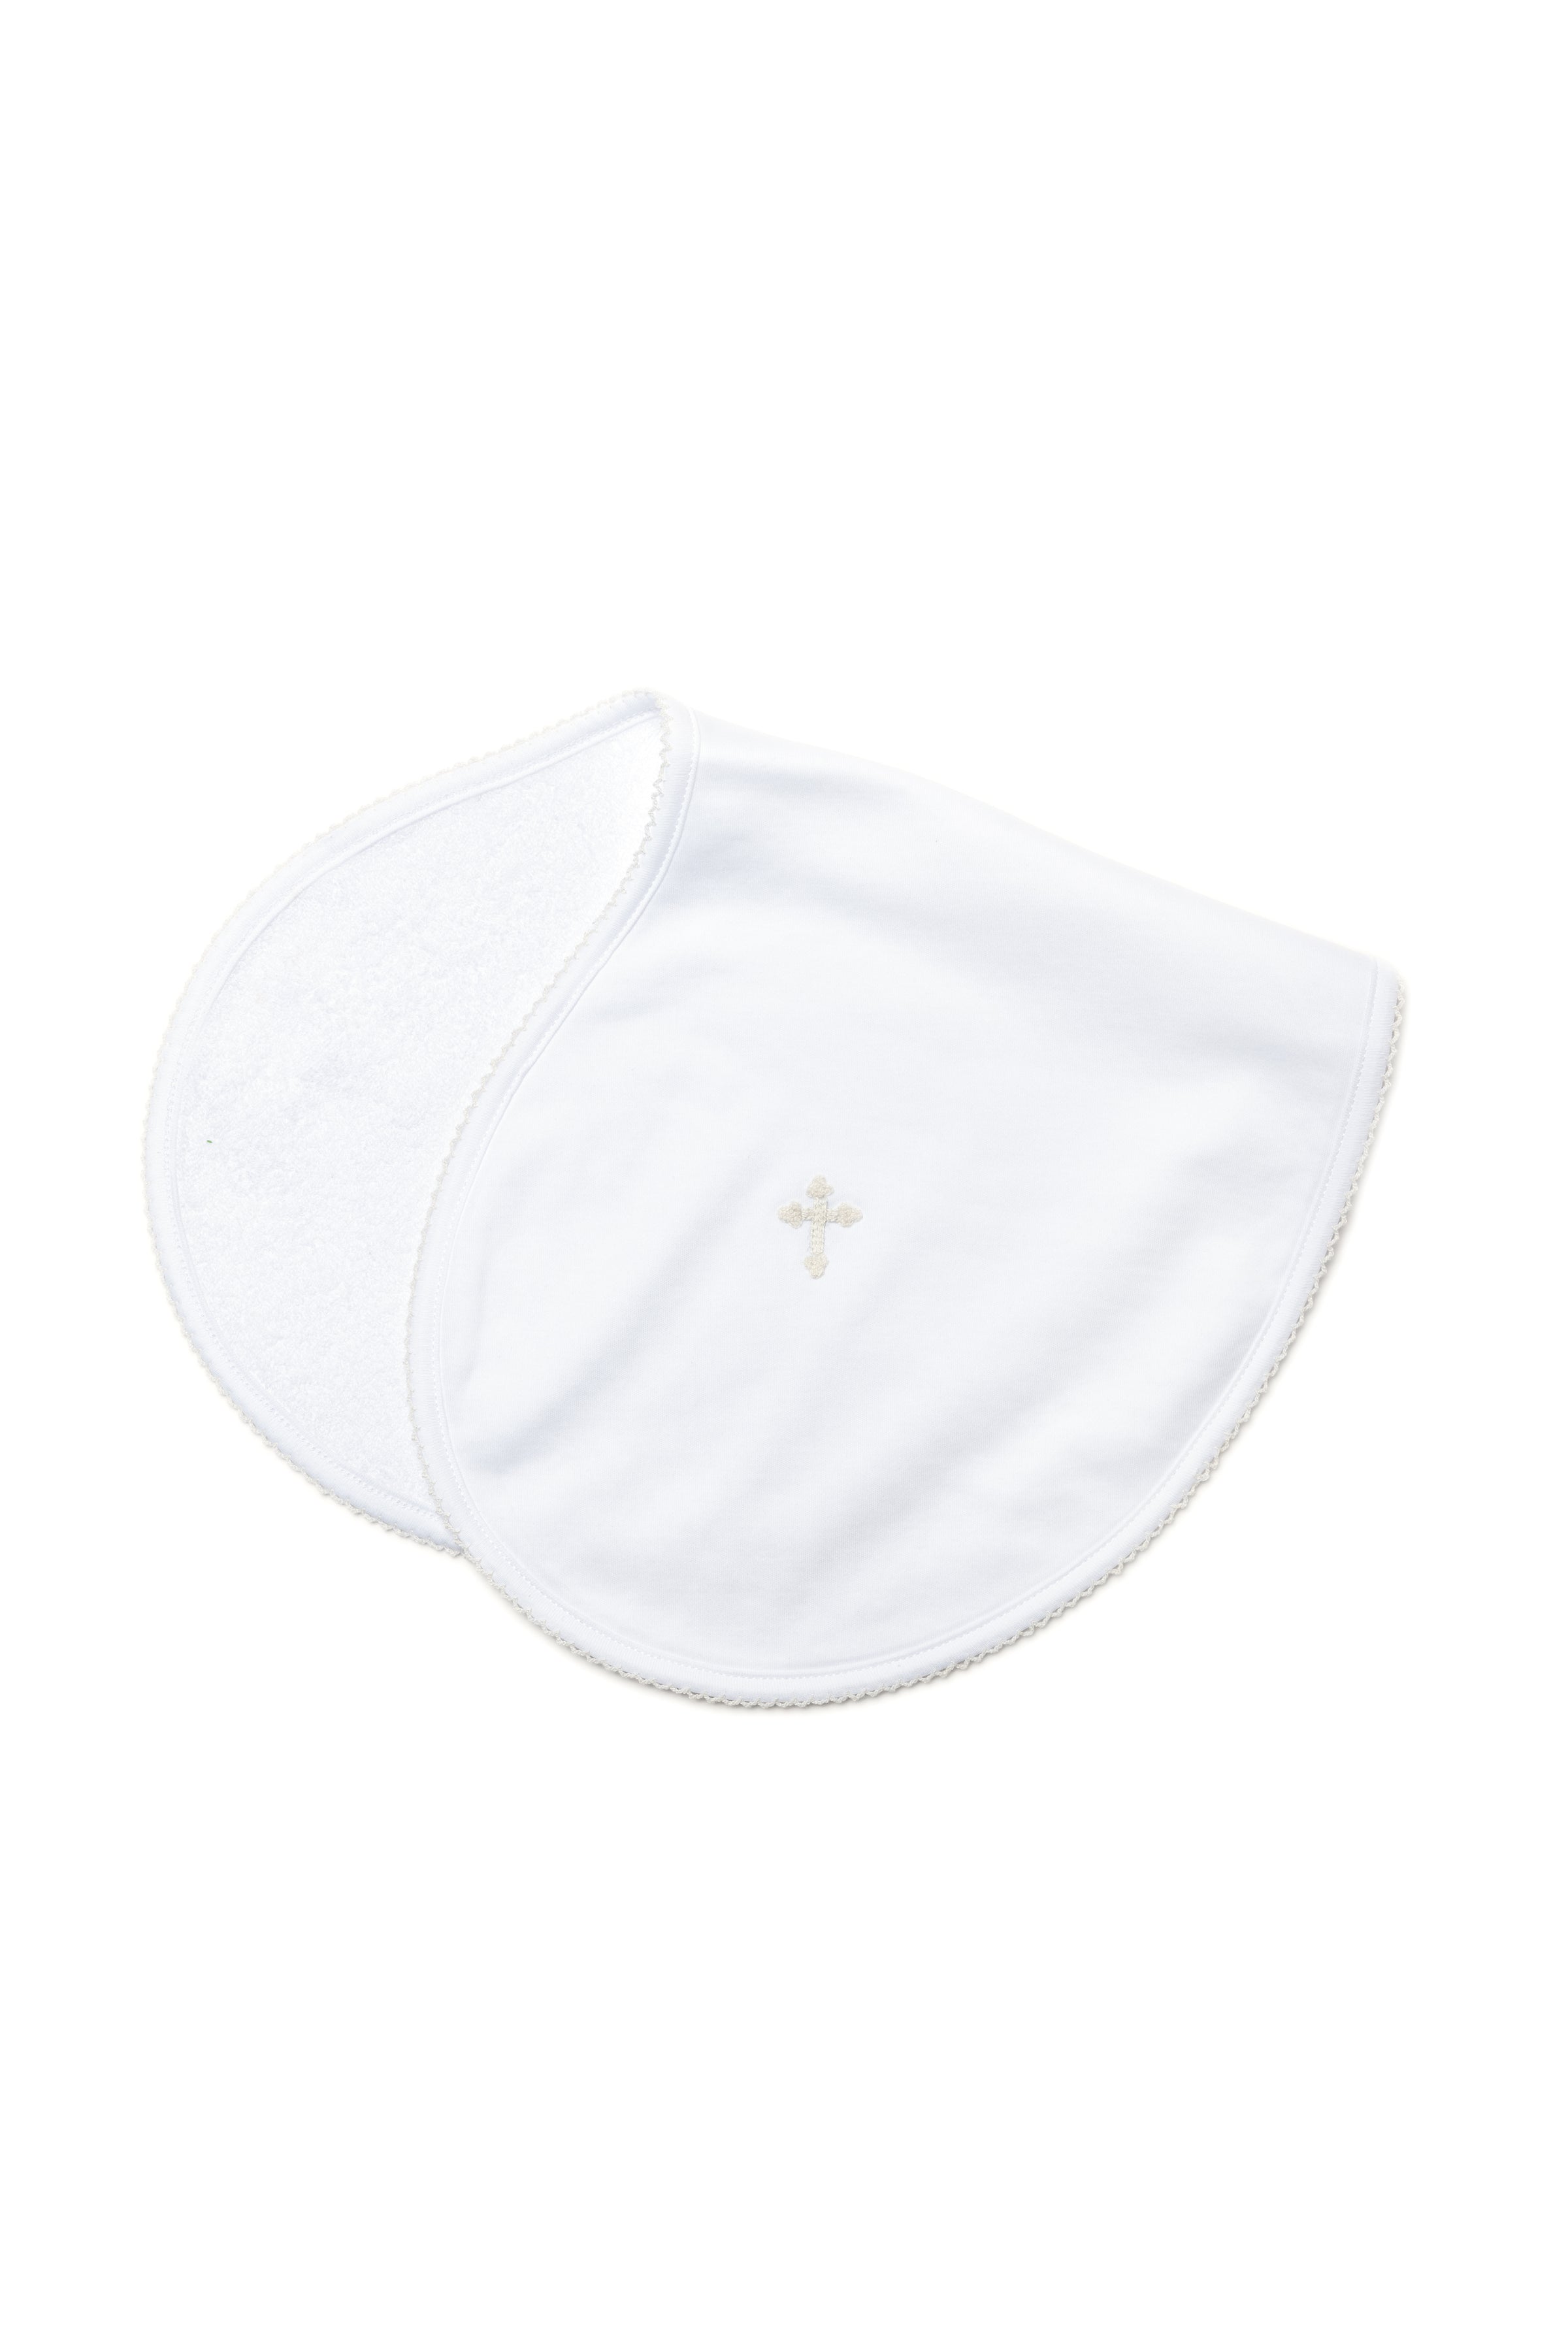 Unisex Baby Cross Burp Cloth